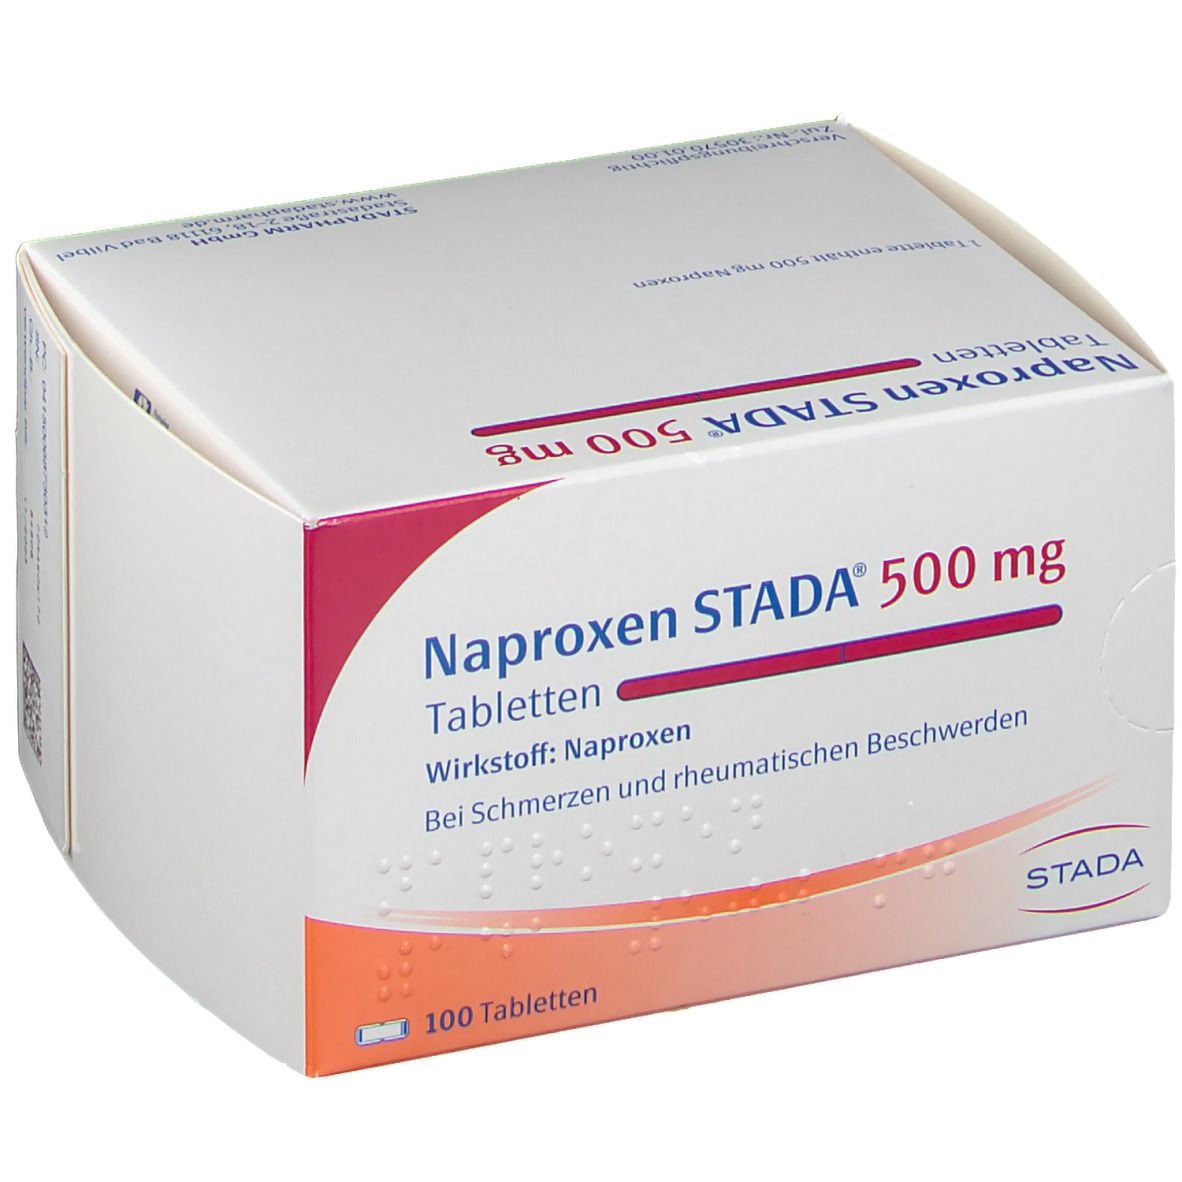 Naproxen STADA® 500 mg